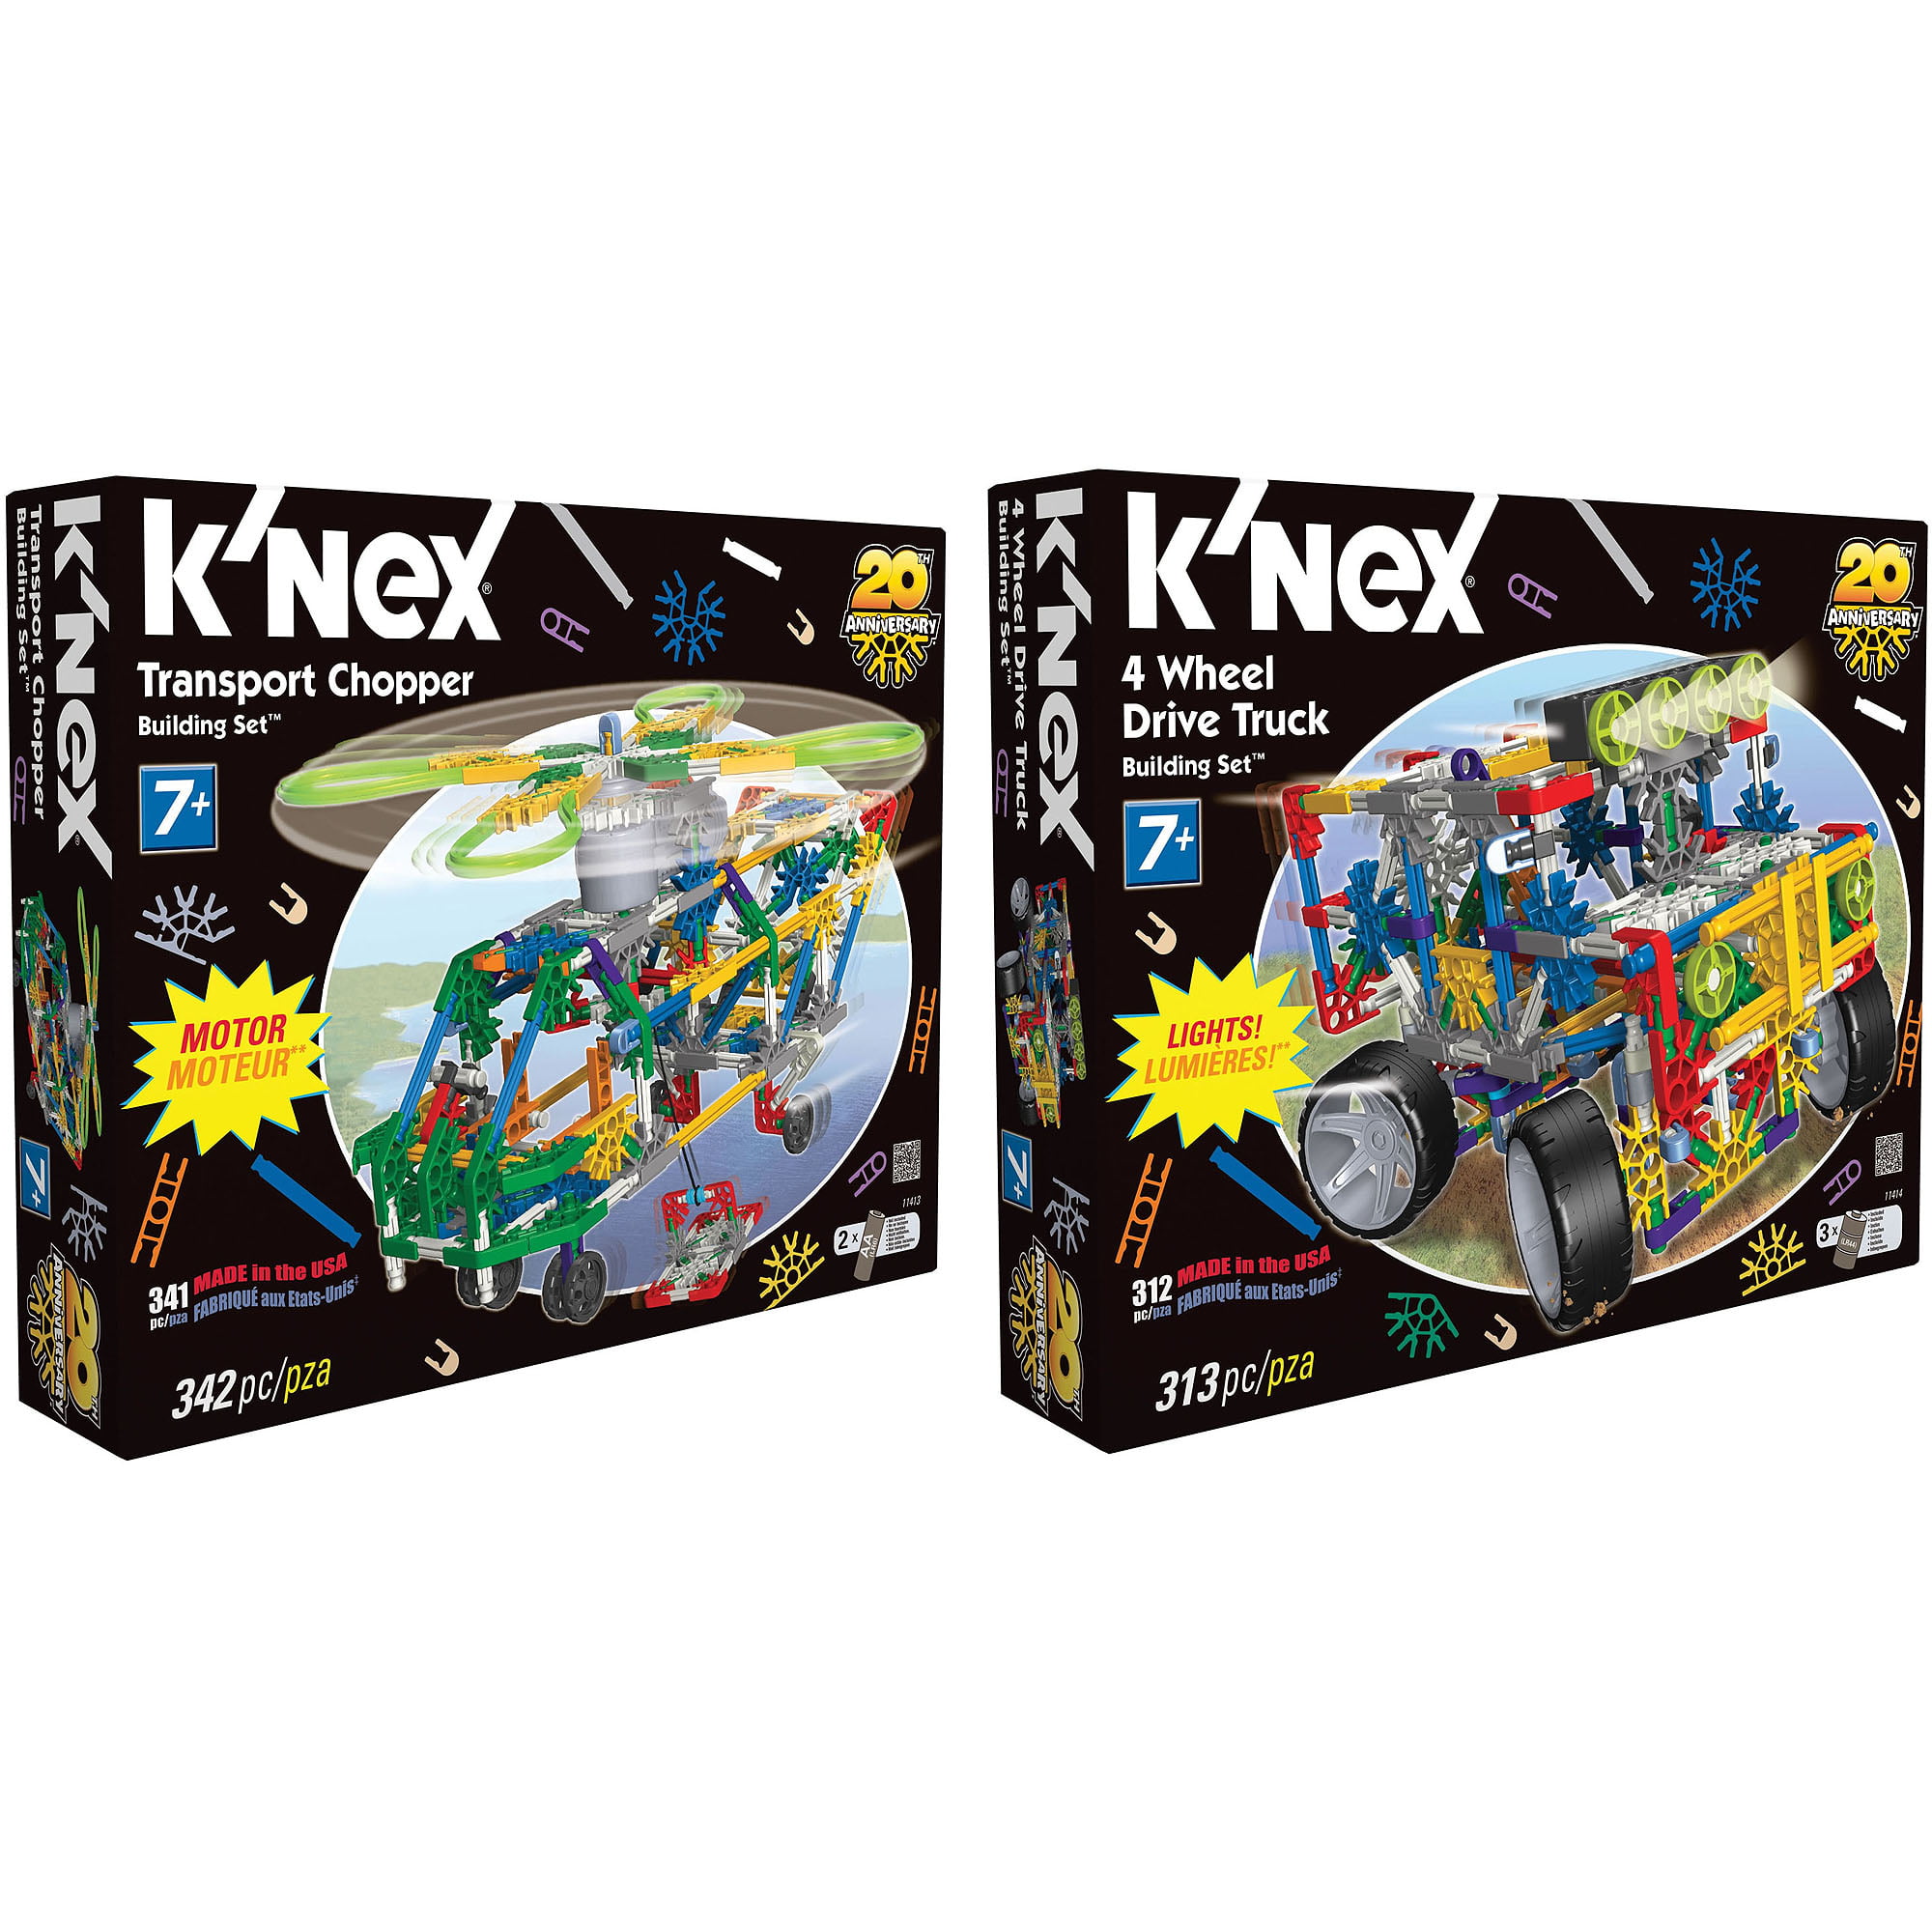 Transport Chopper K'Nex Building Worlds Kids Love brand NEW 342 pieces 